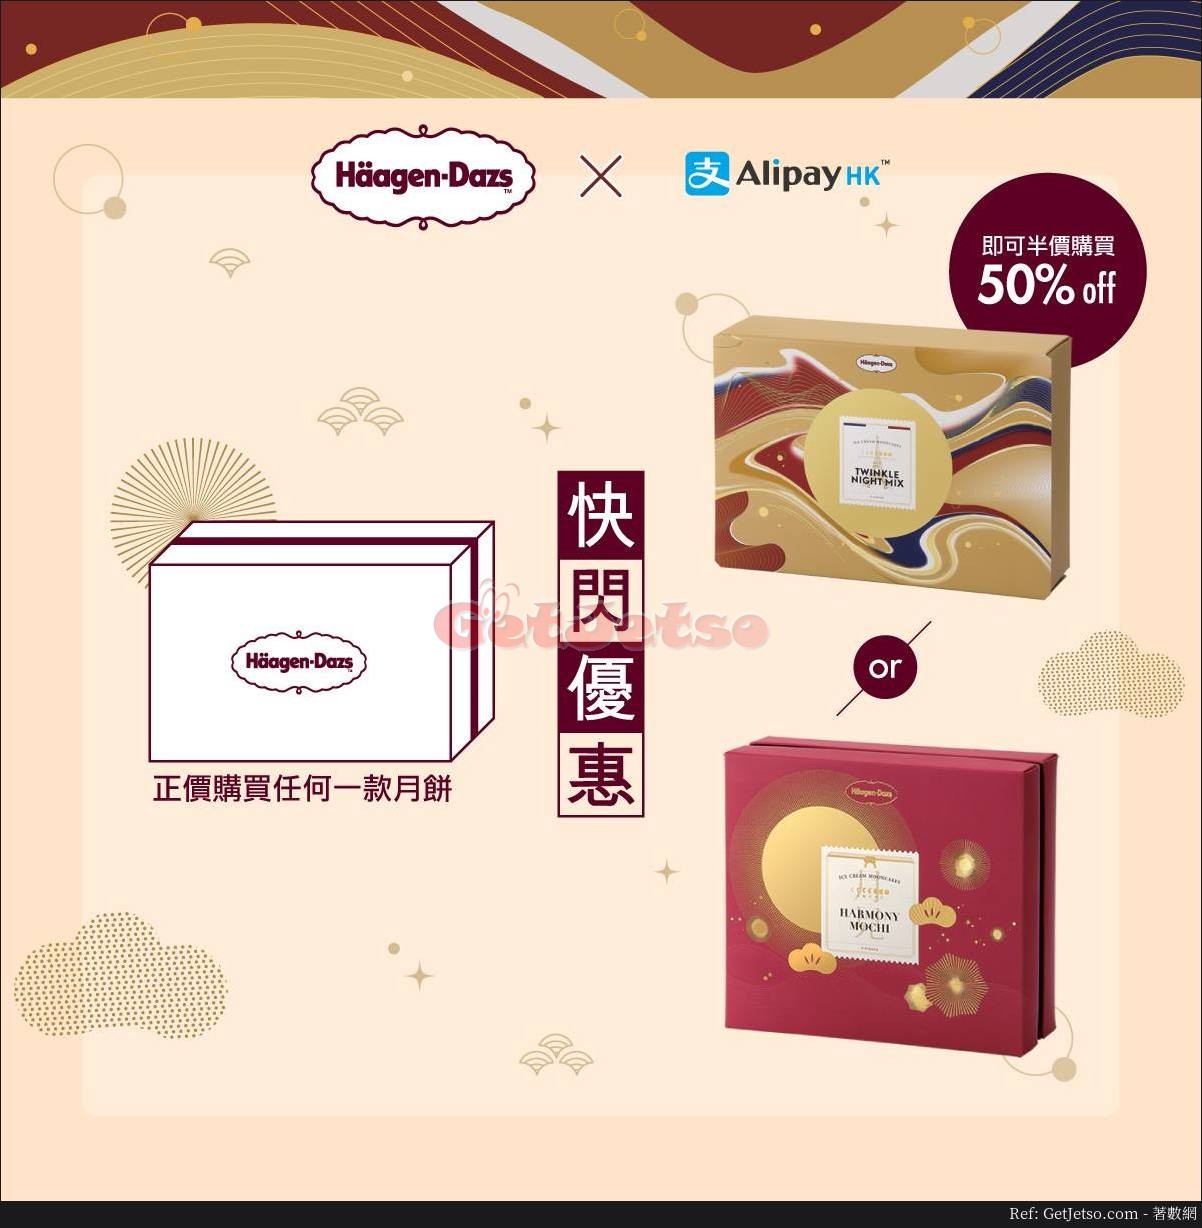 Häagen-Dazs 雪糕月餅第2盒半價優惠@AlipayHK(18年8月24-26日)圖片1